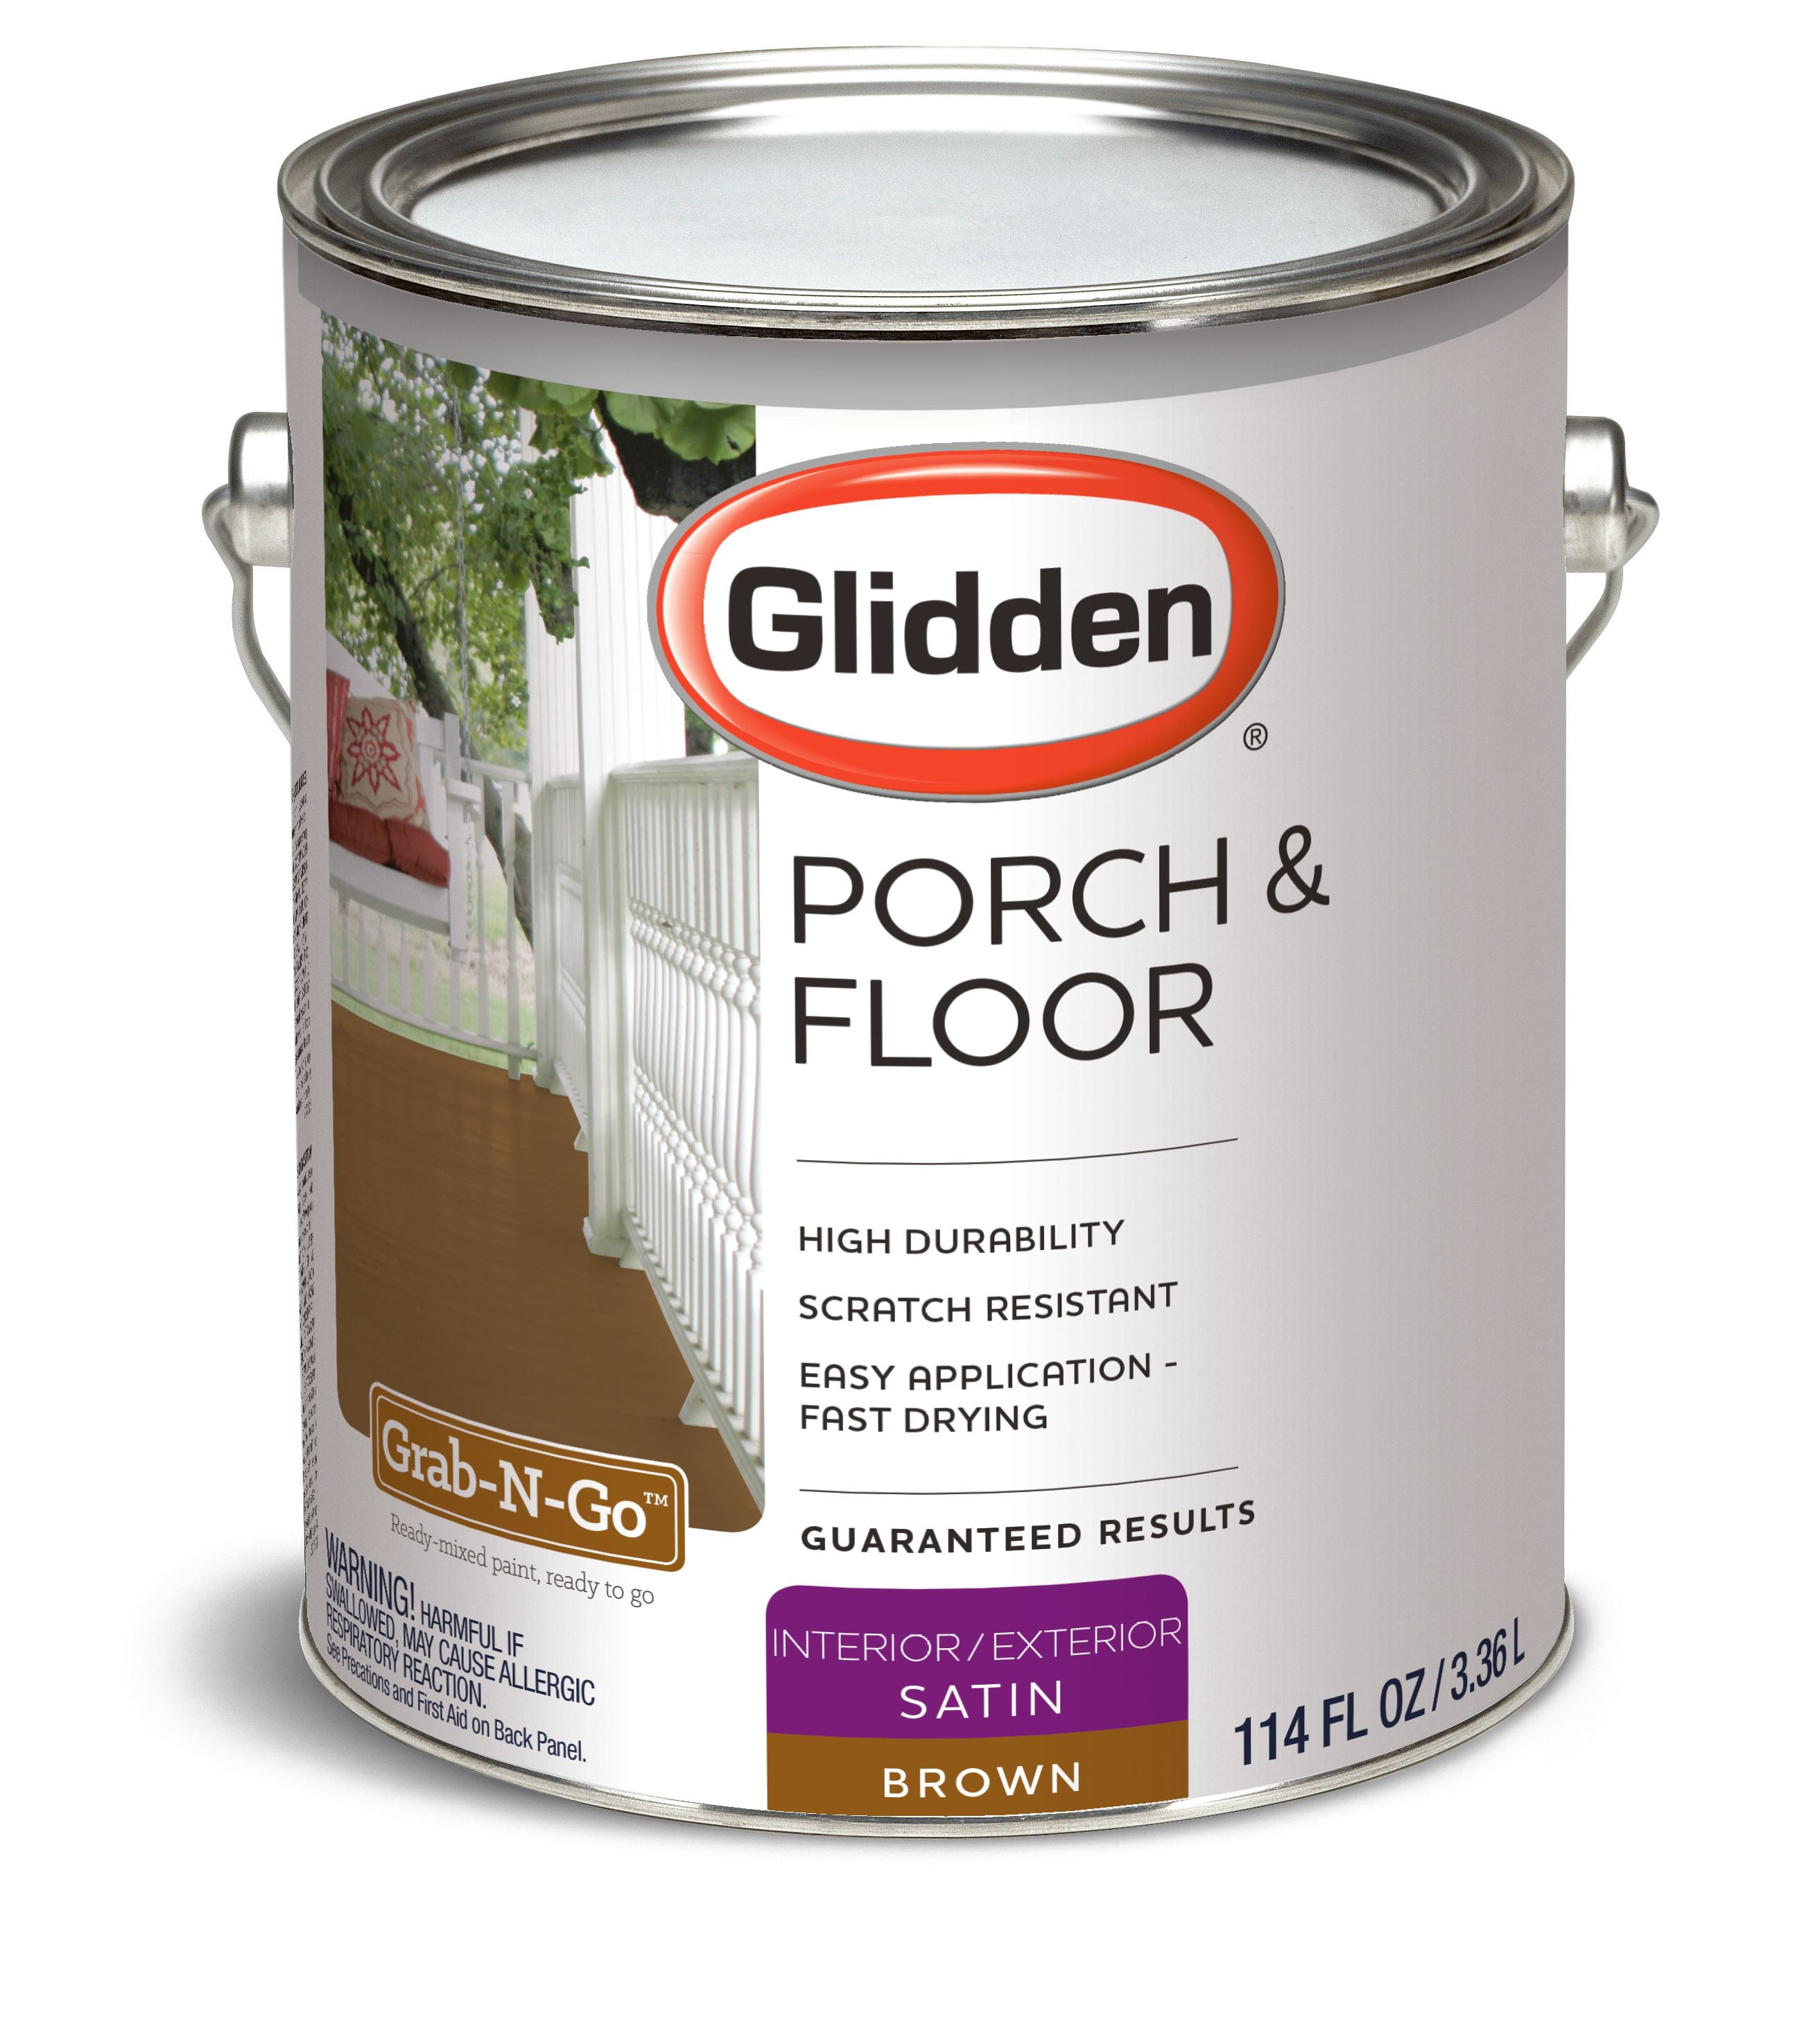 Glidden Porch & Floor Paint and Primer